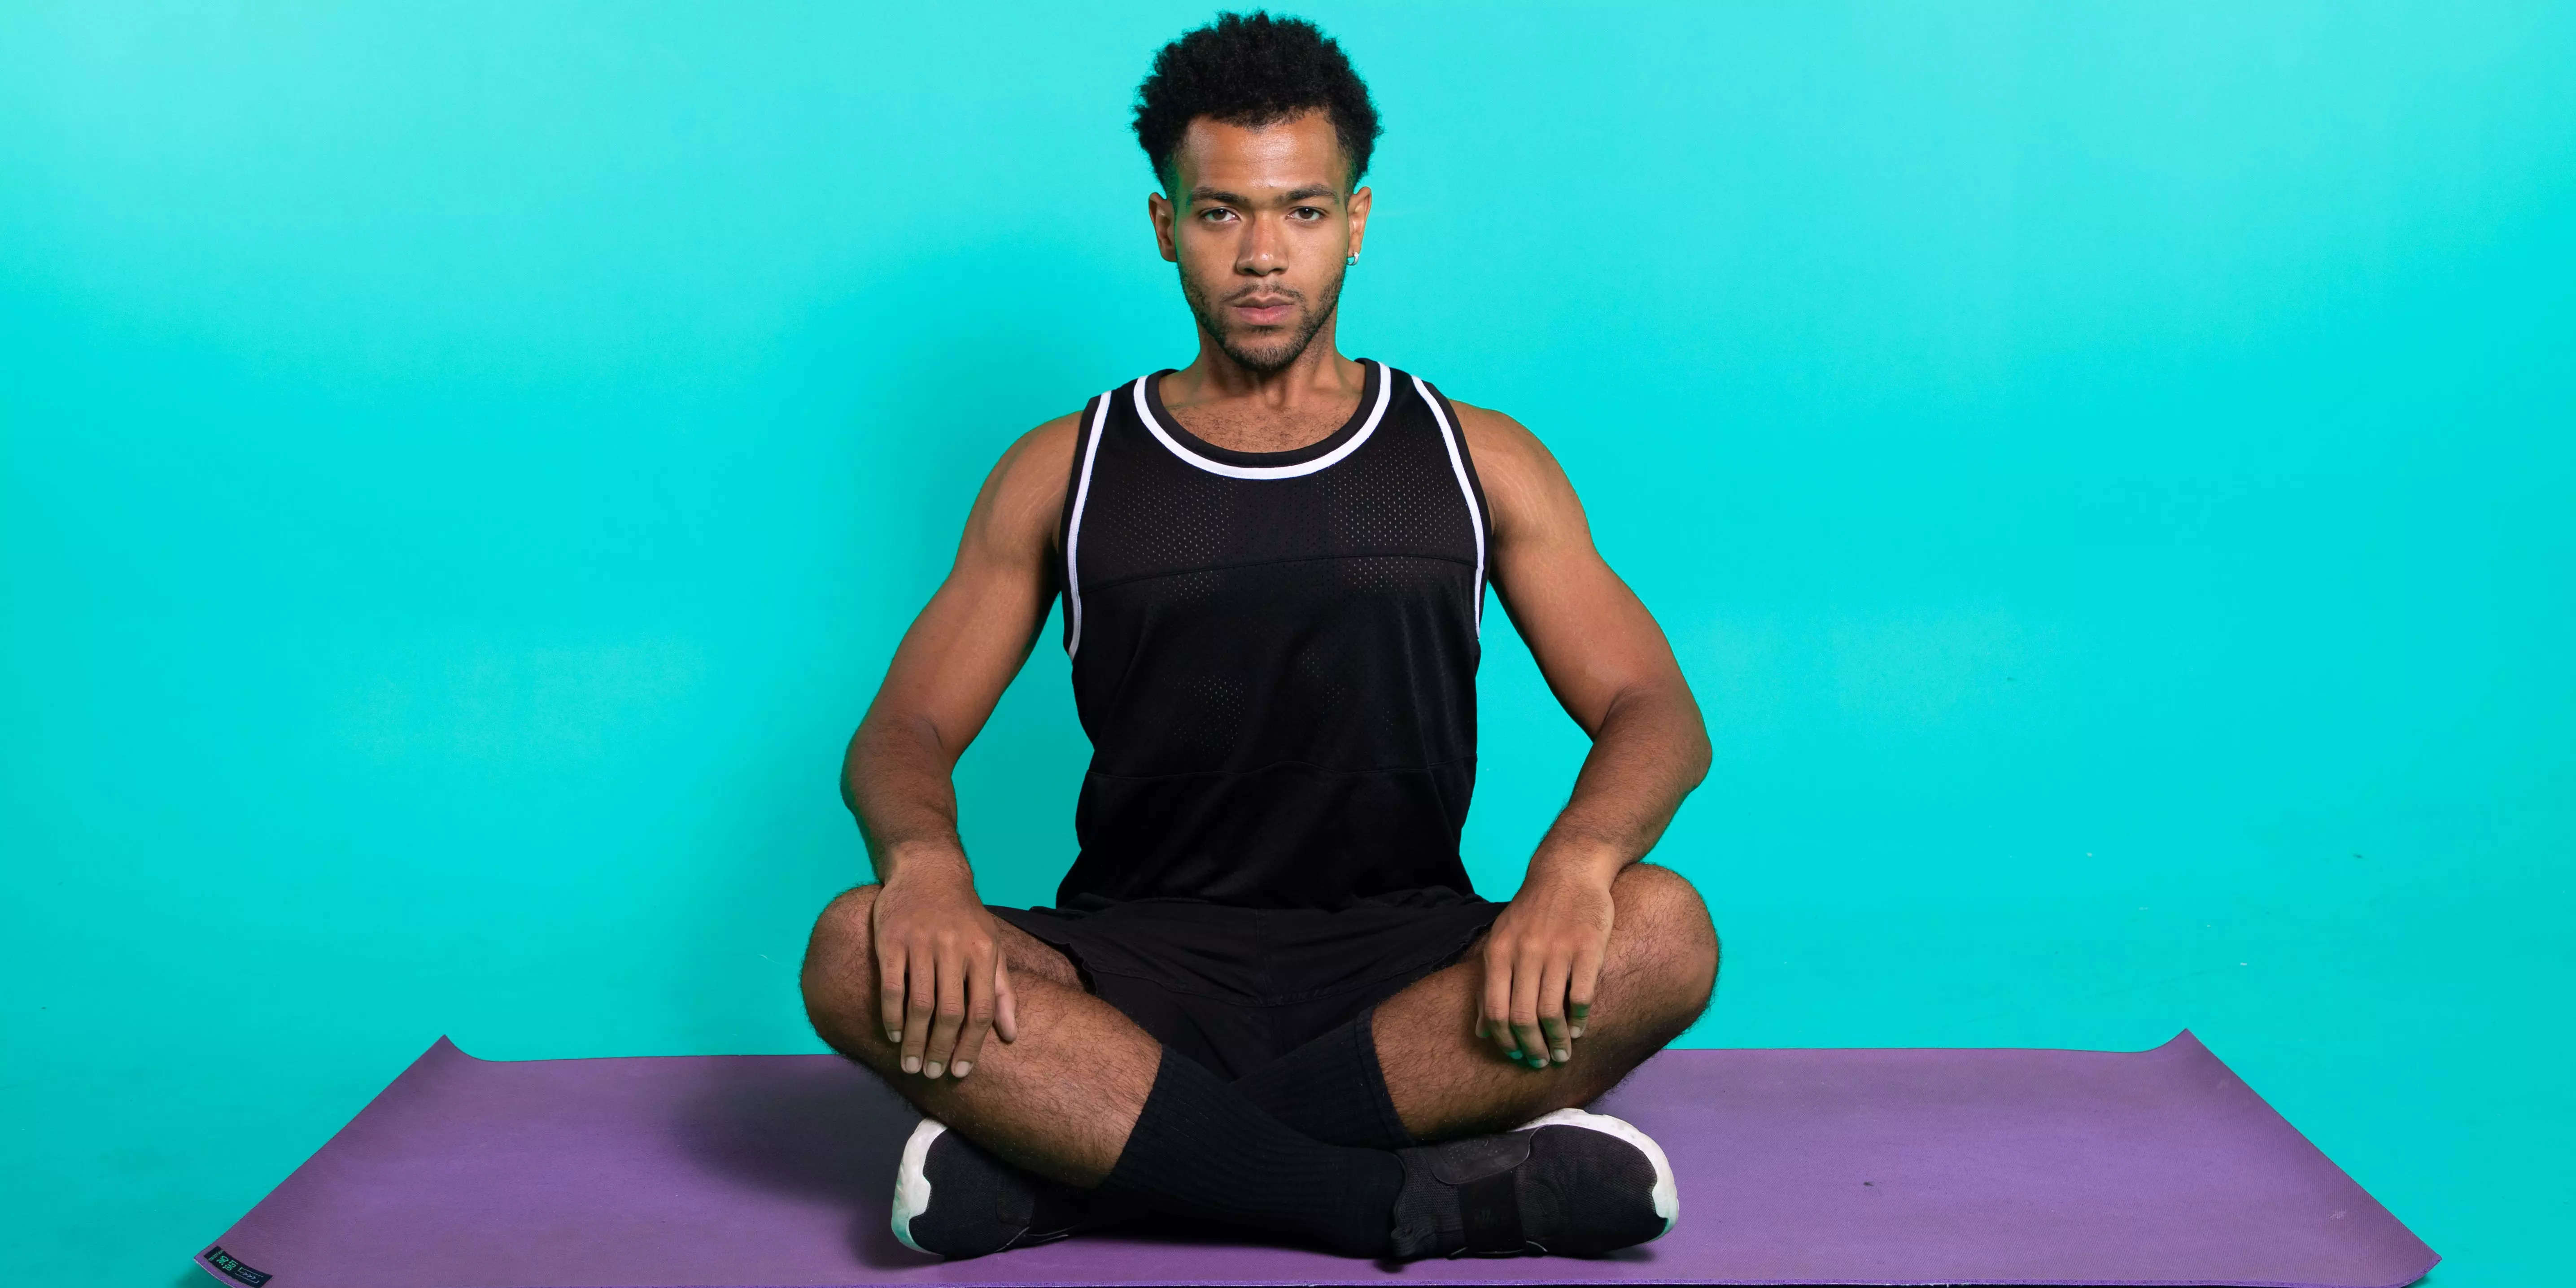 Basic and Advanced Seated Yoga Poses | Compass pose, Seated yoga poses, Yoga  benefits